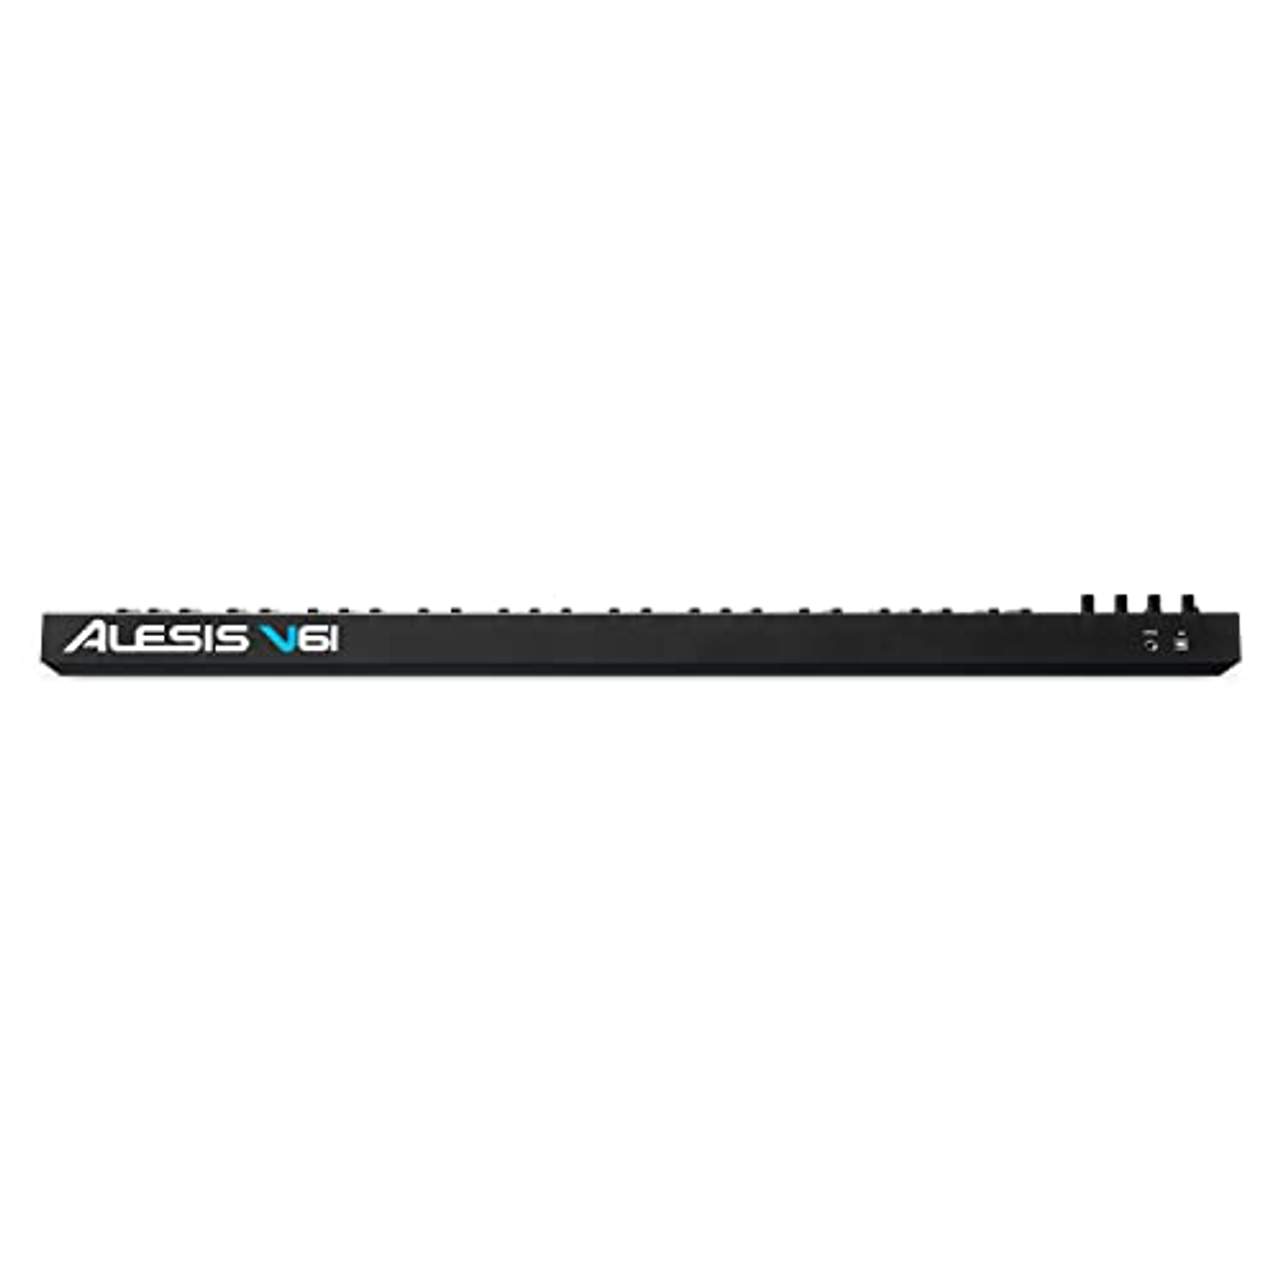 Alesis V61 USB Midi Pad